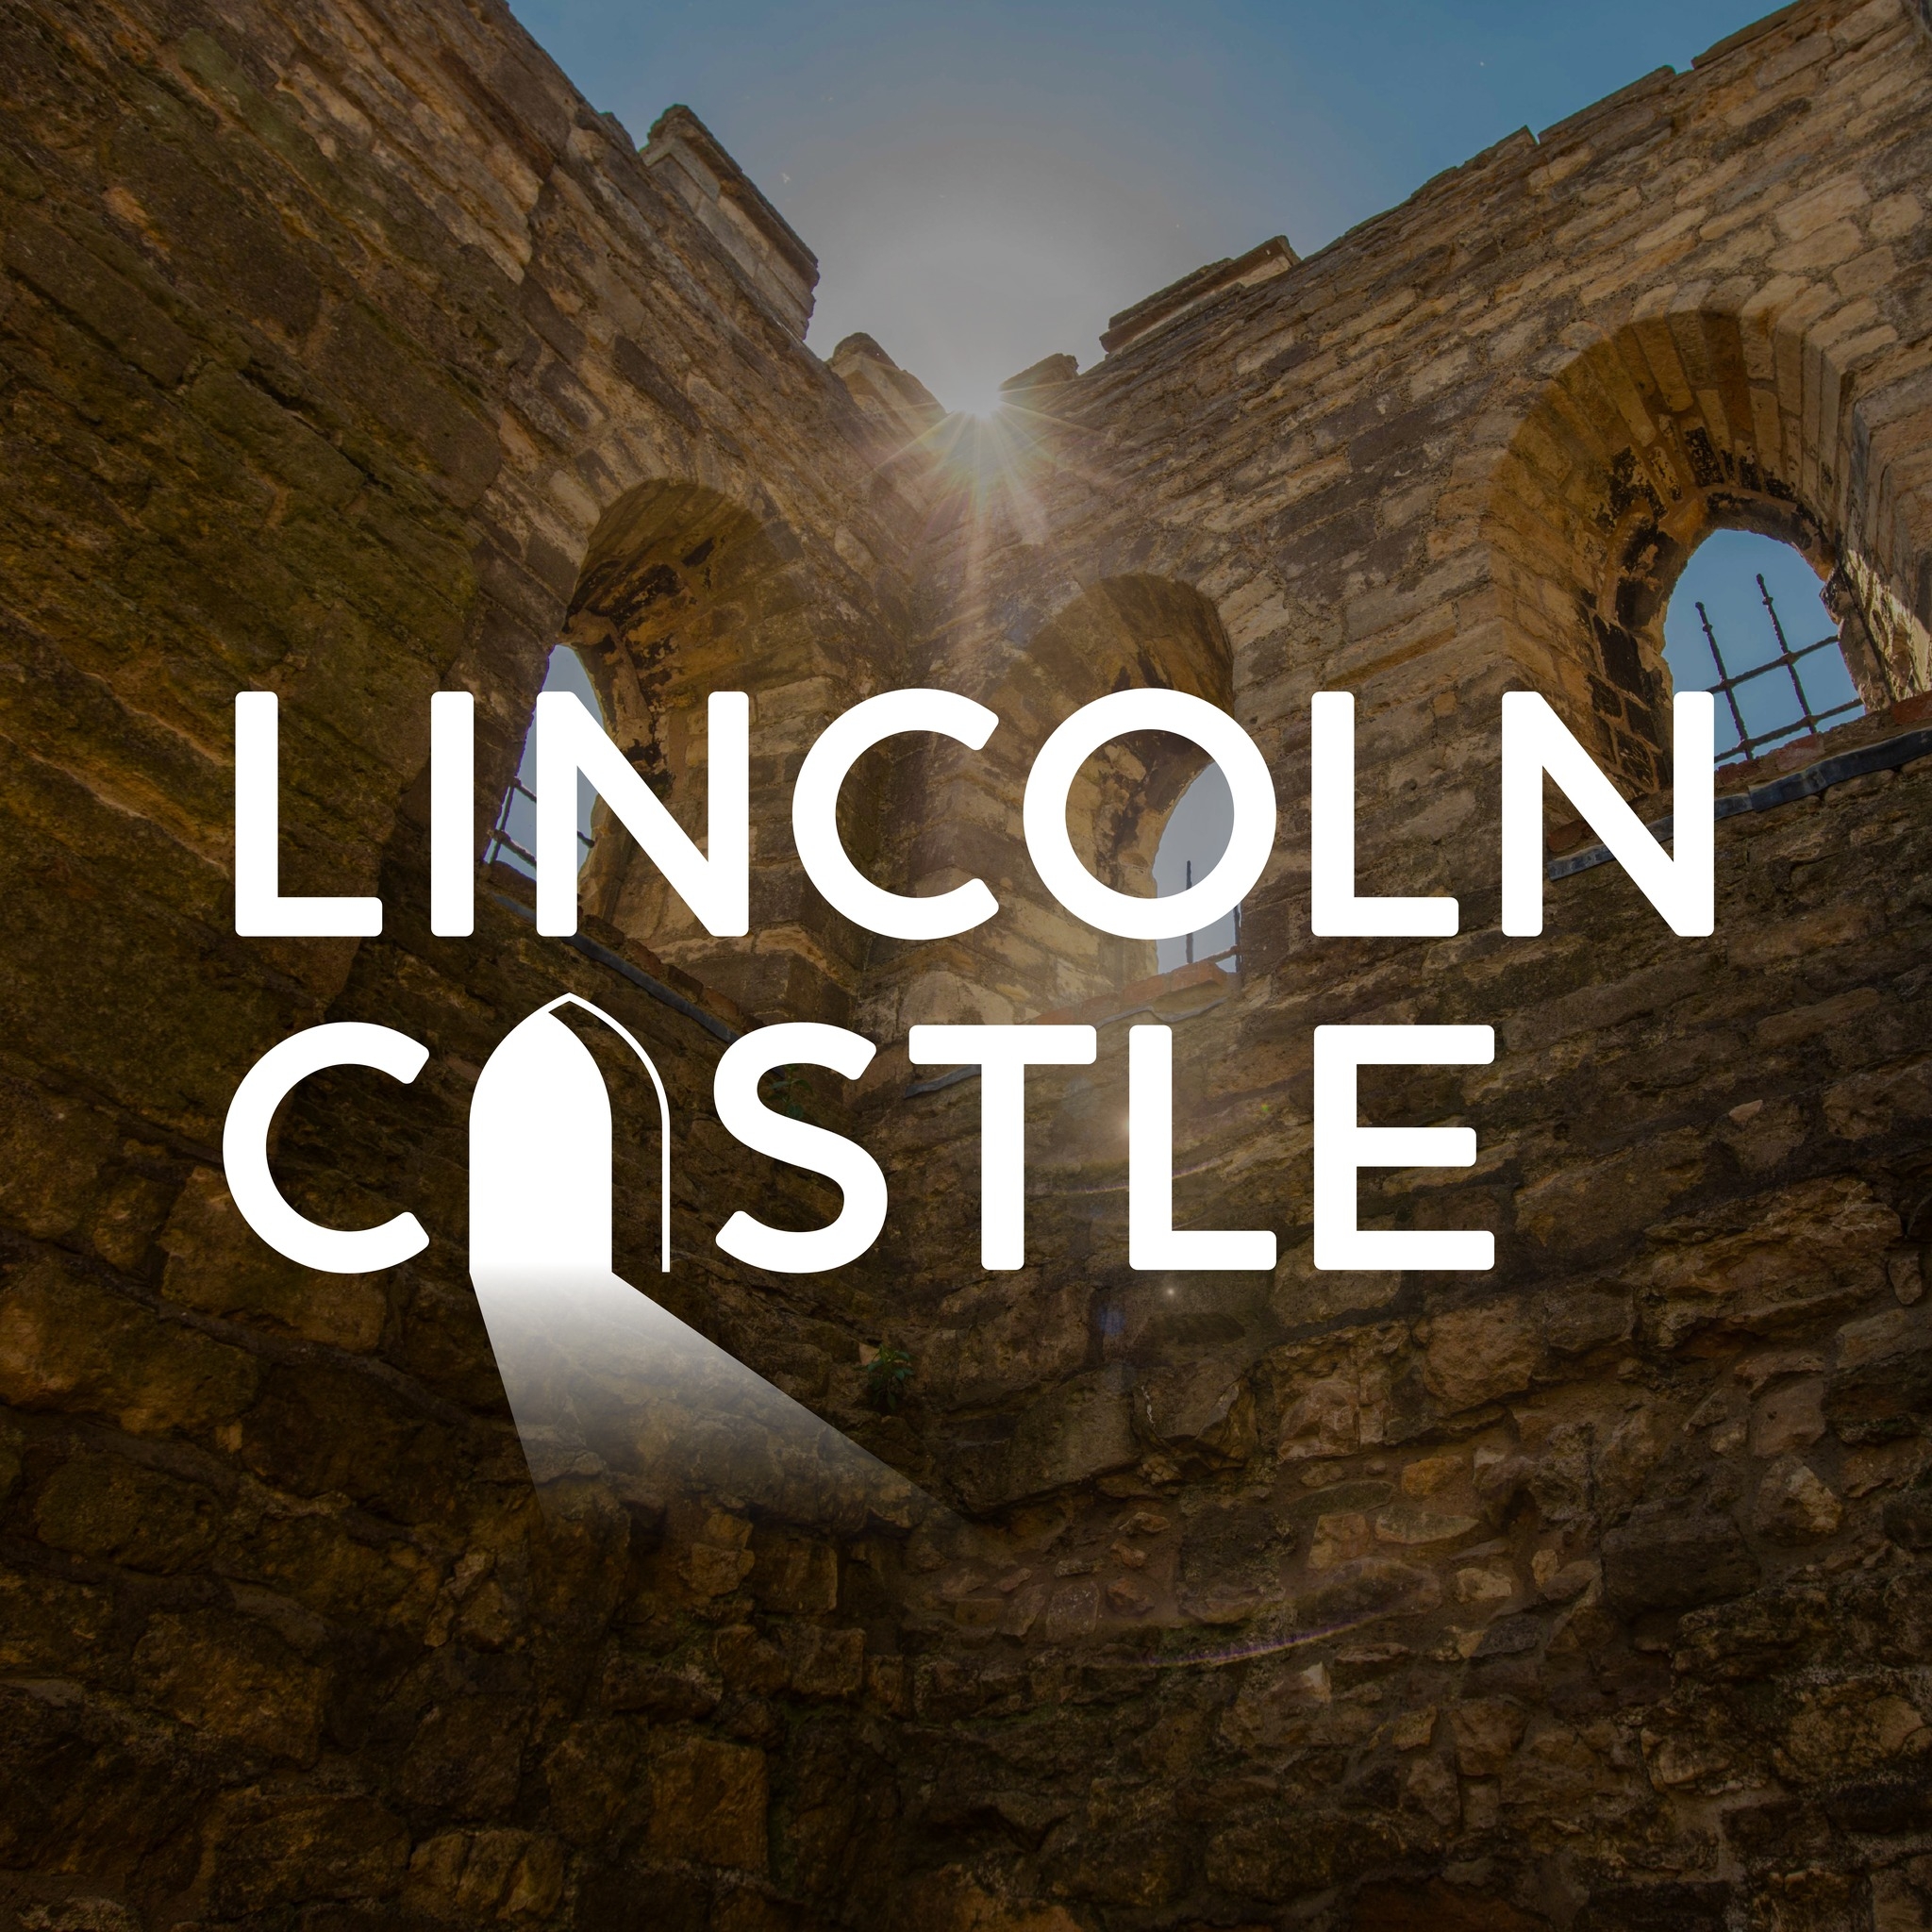 Lincoln Castle Tickets